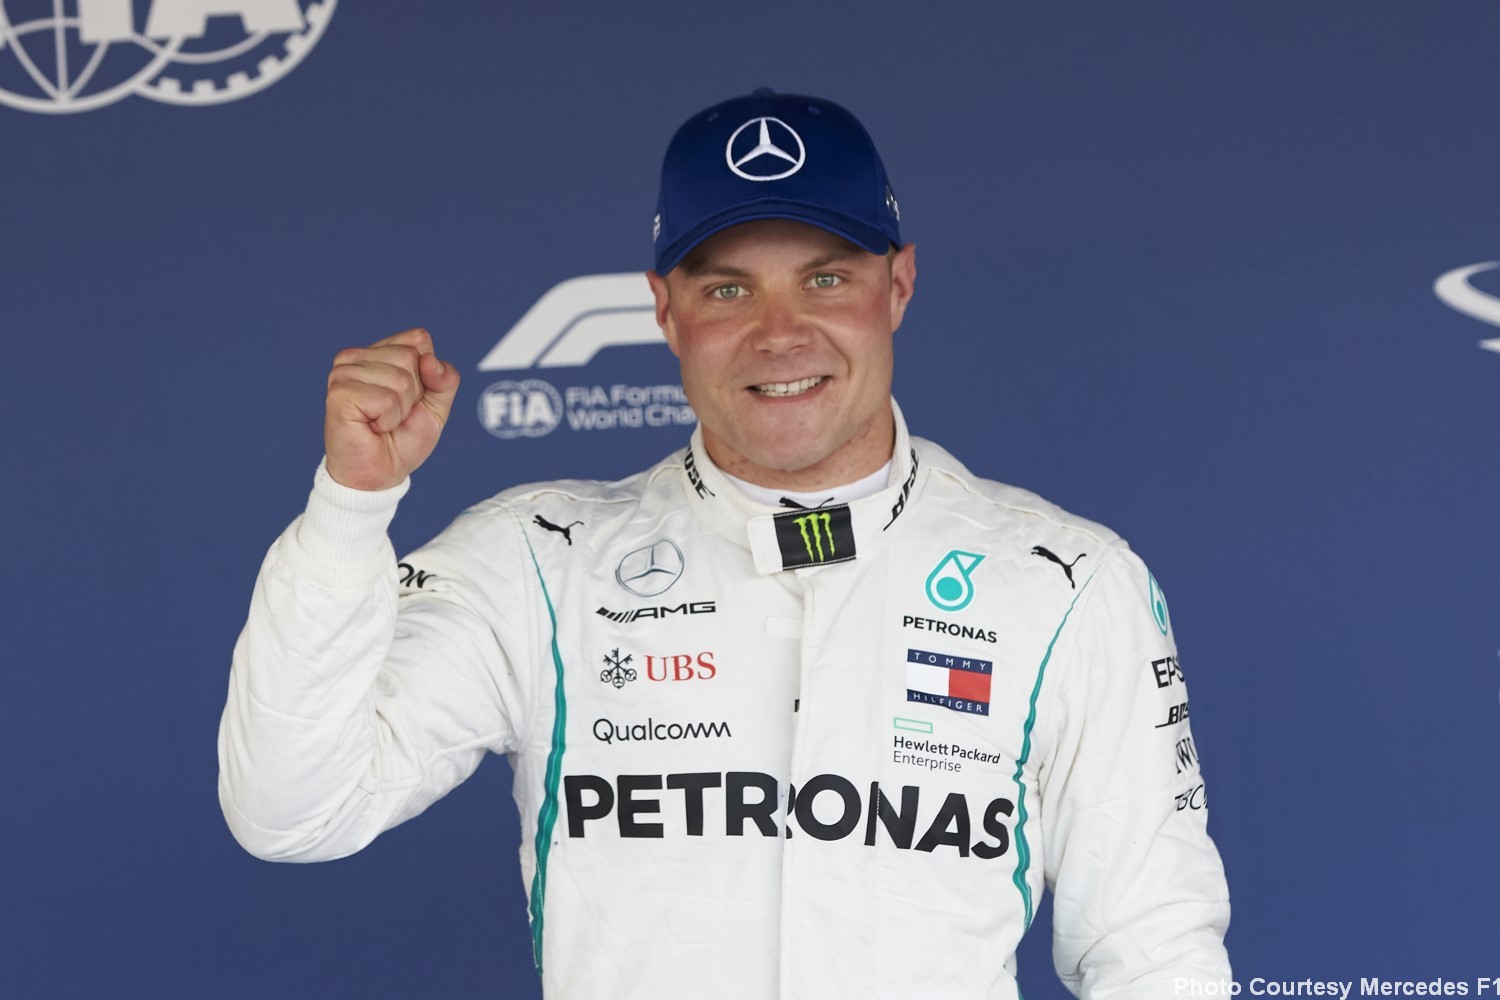 Unless Hamilton falls out, Mercedes slave driver, Valtteri Bottas, will let Hamilton past and win the Russia GP